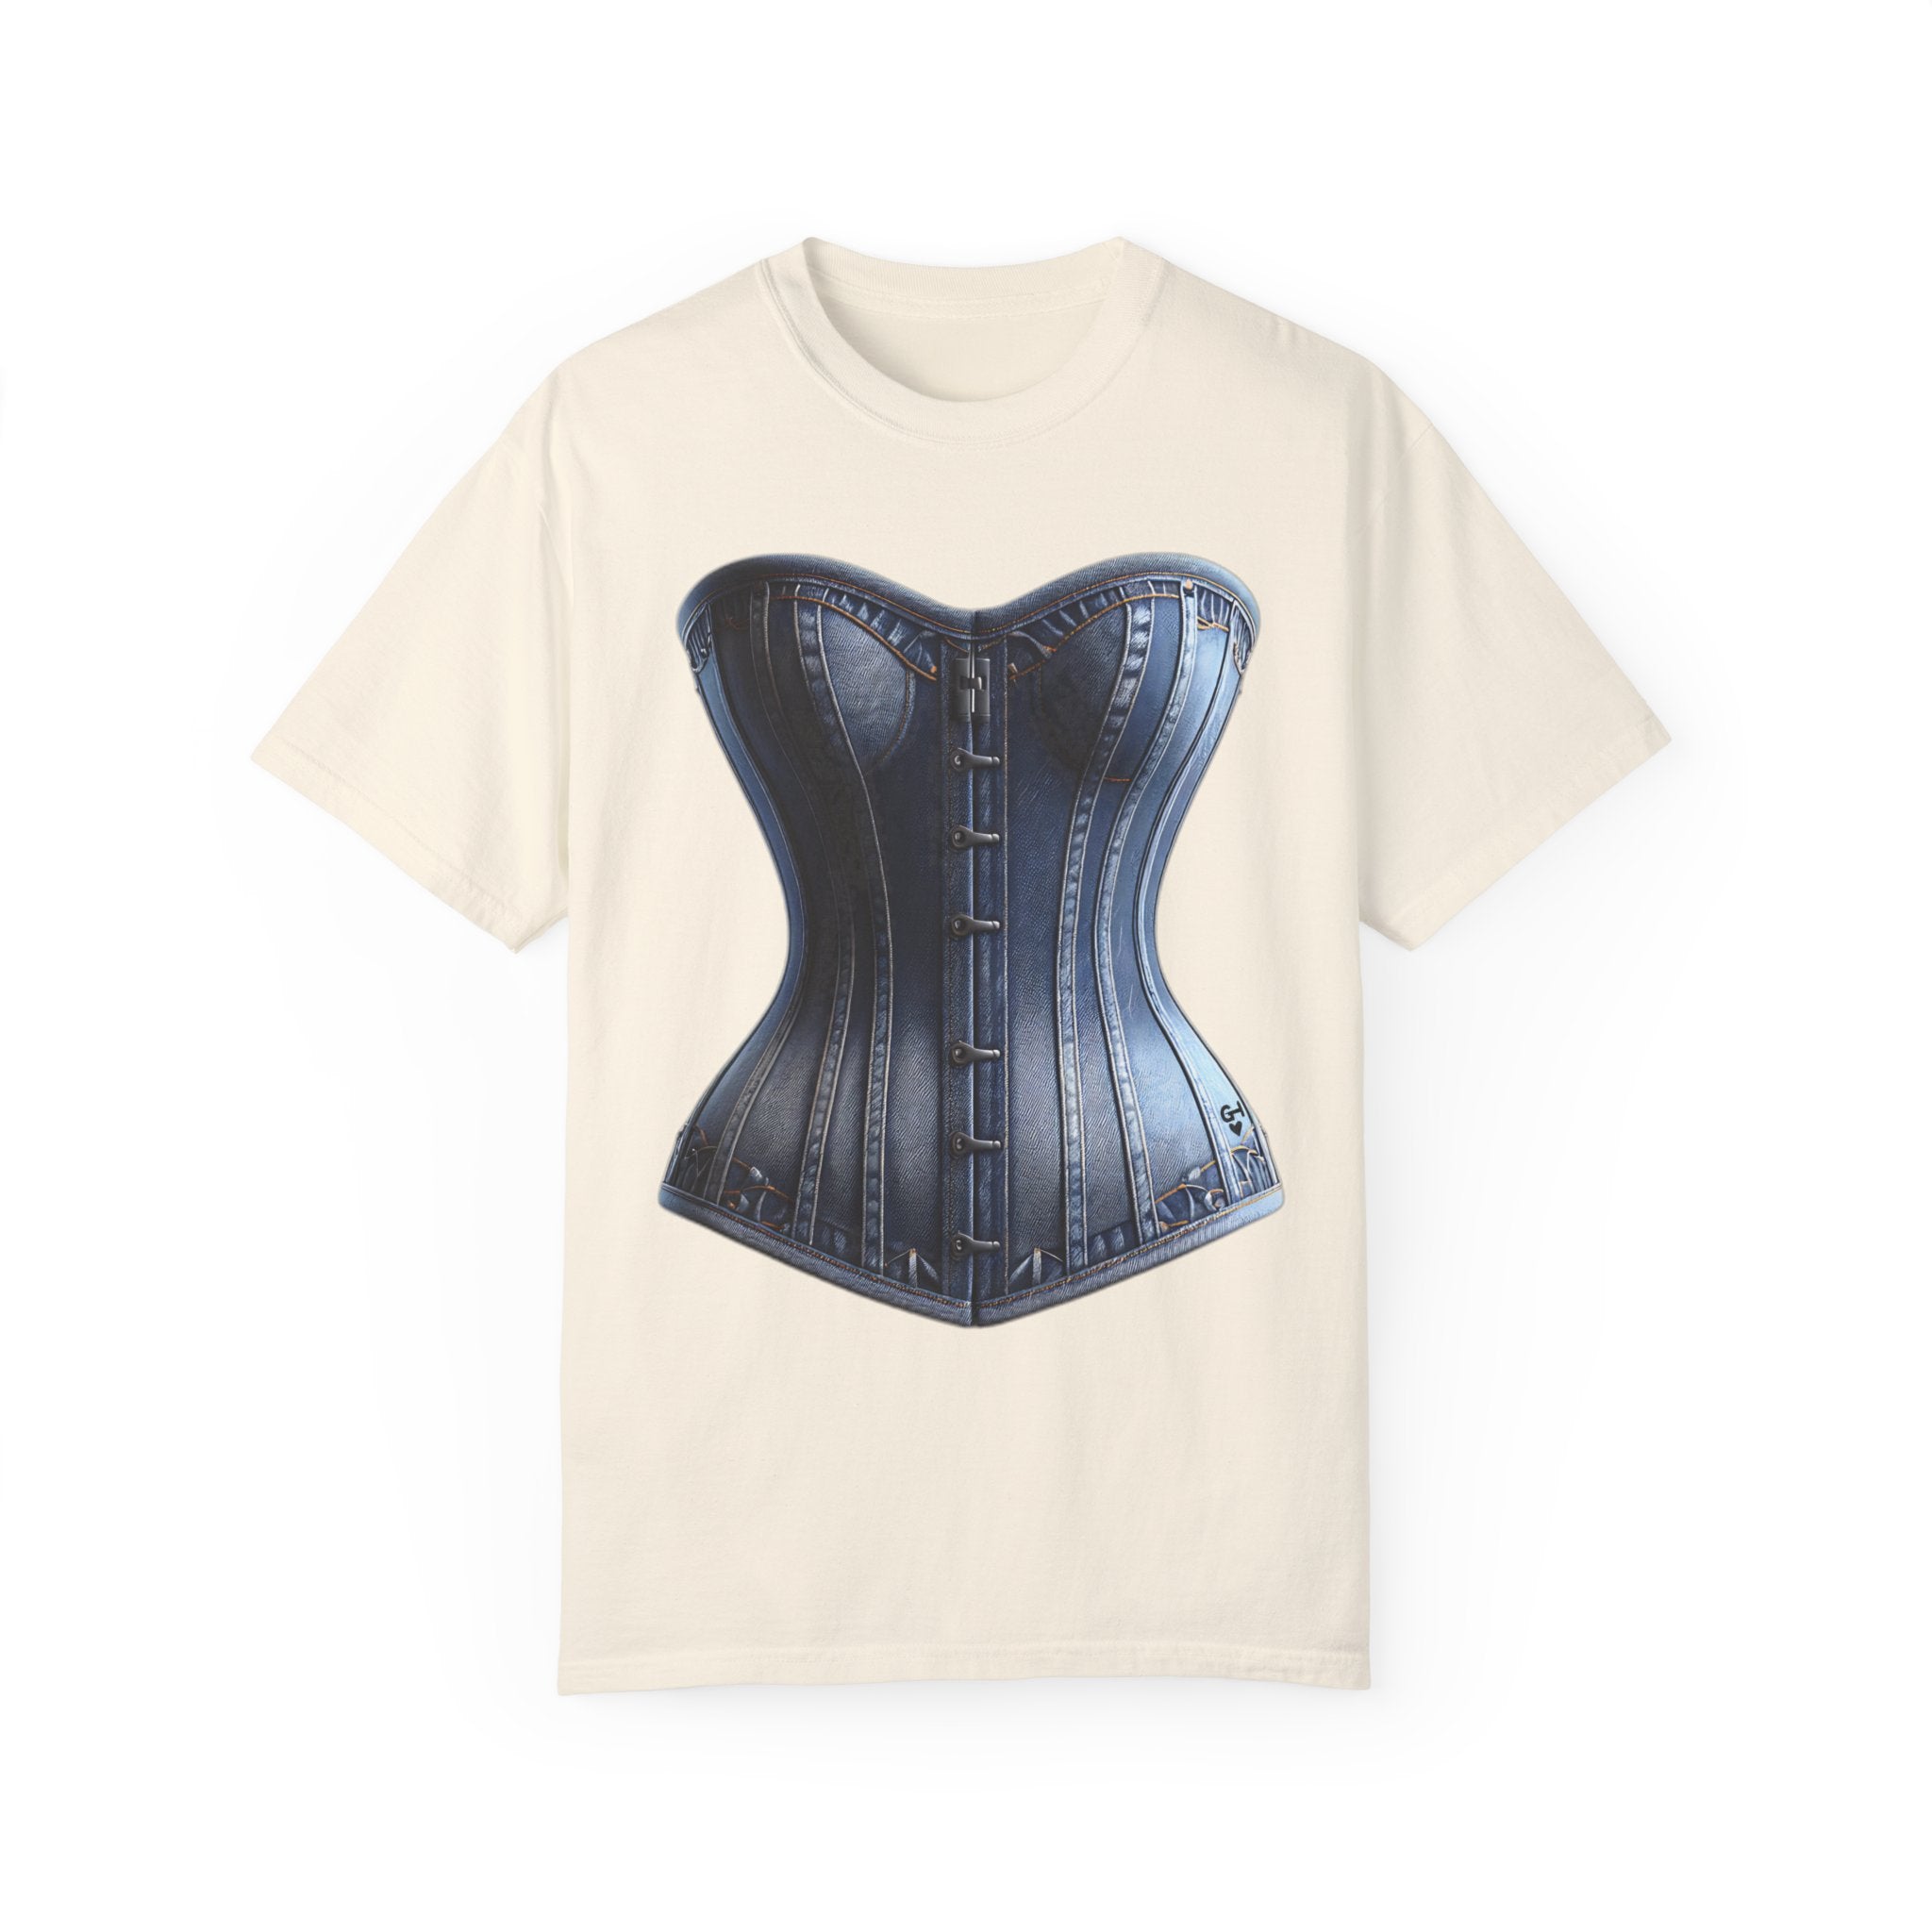 GOLDxTEAL stylish corset graphic t-shirt.